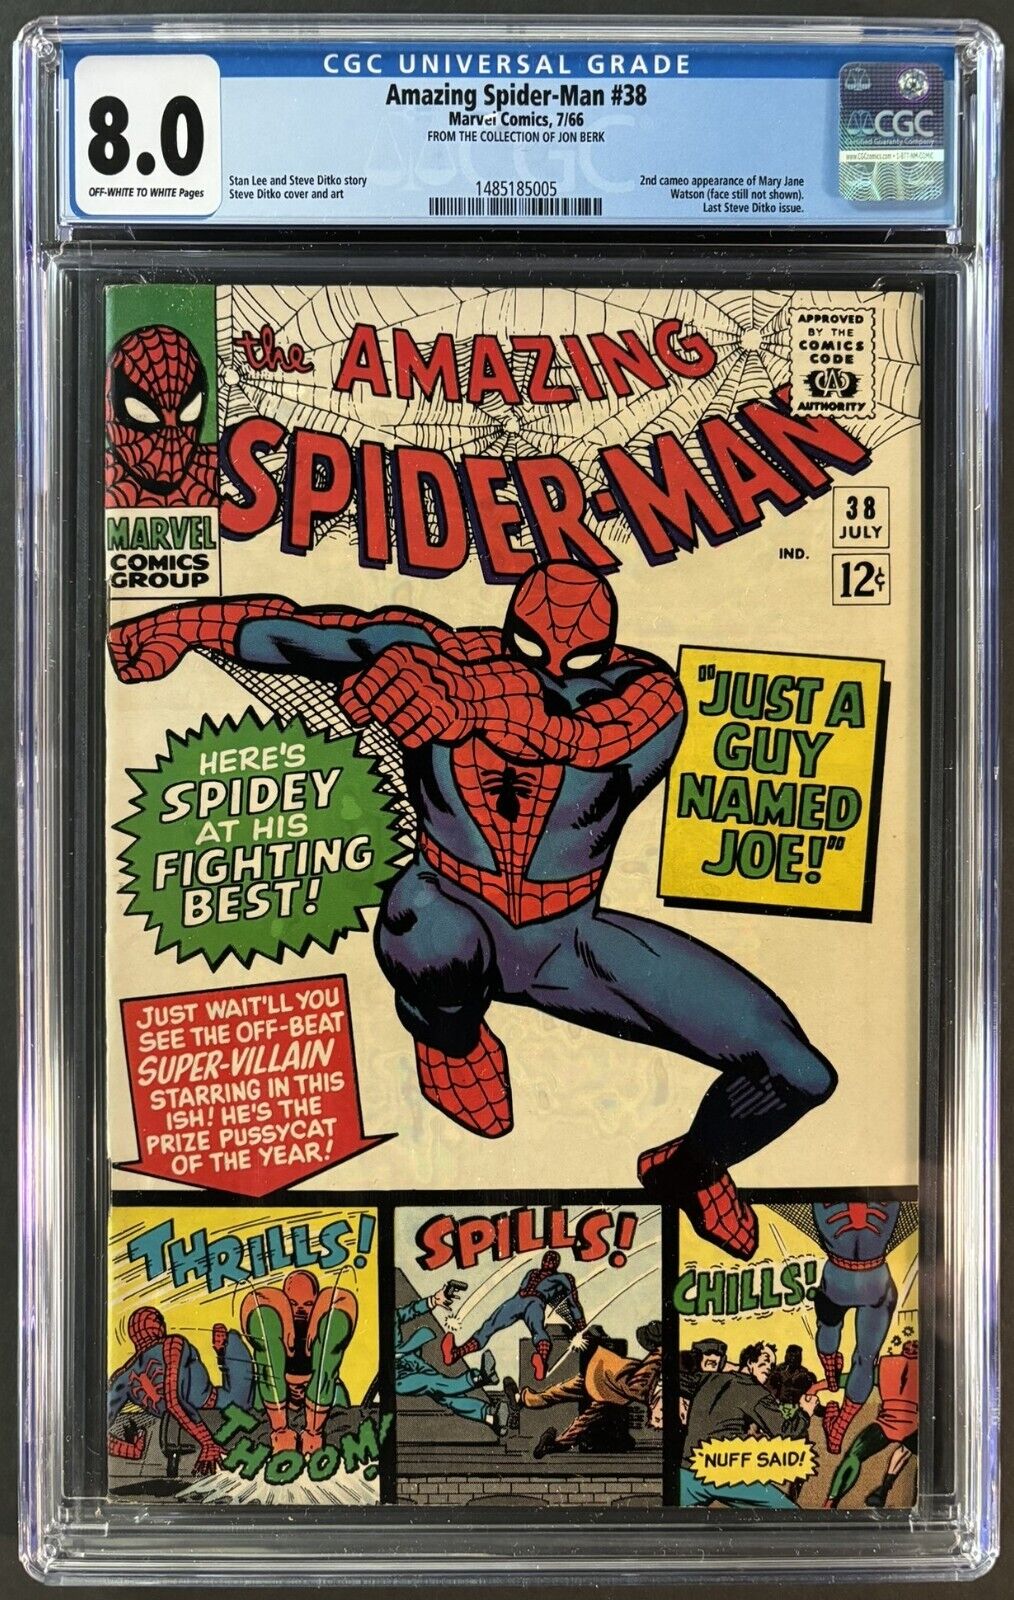 AMAZING SPIDER-MAN #38 CGC 8.0 OW-W MARVEL COMICS JULY 1966 - LAST DITKO ISSUE